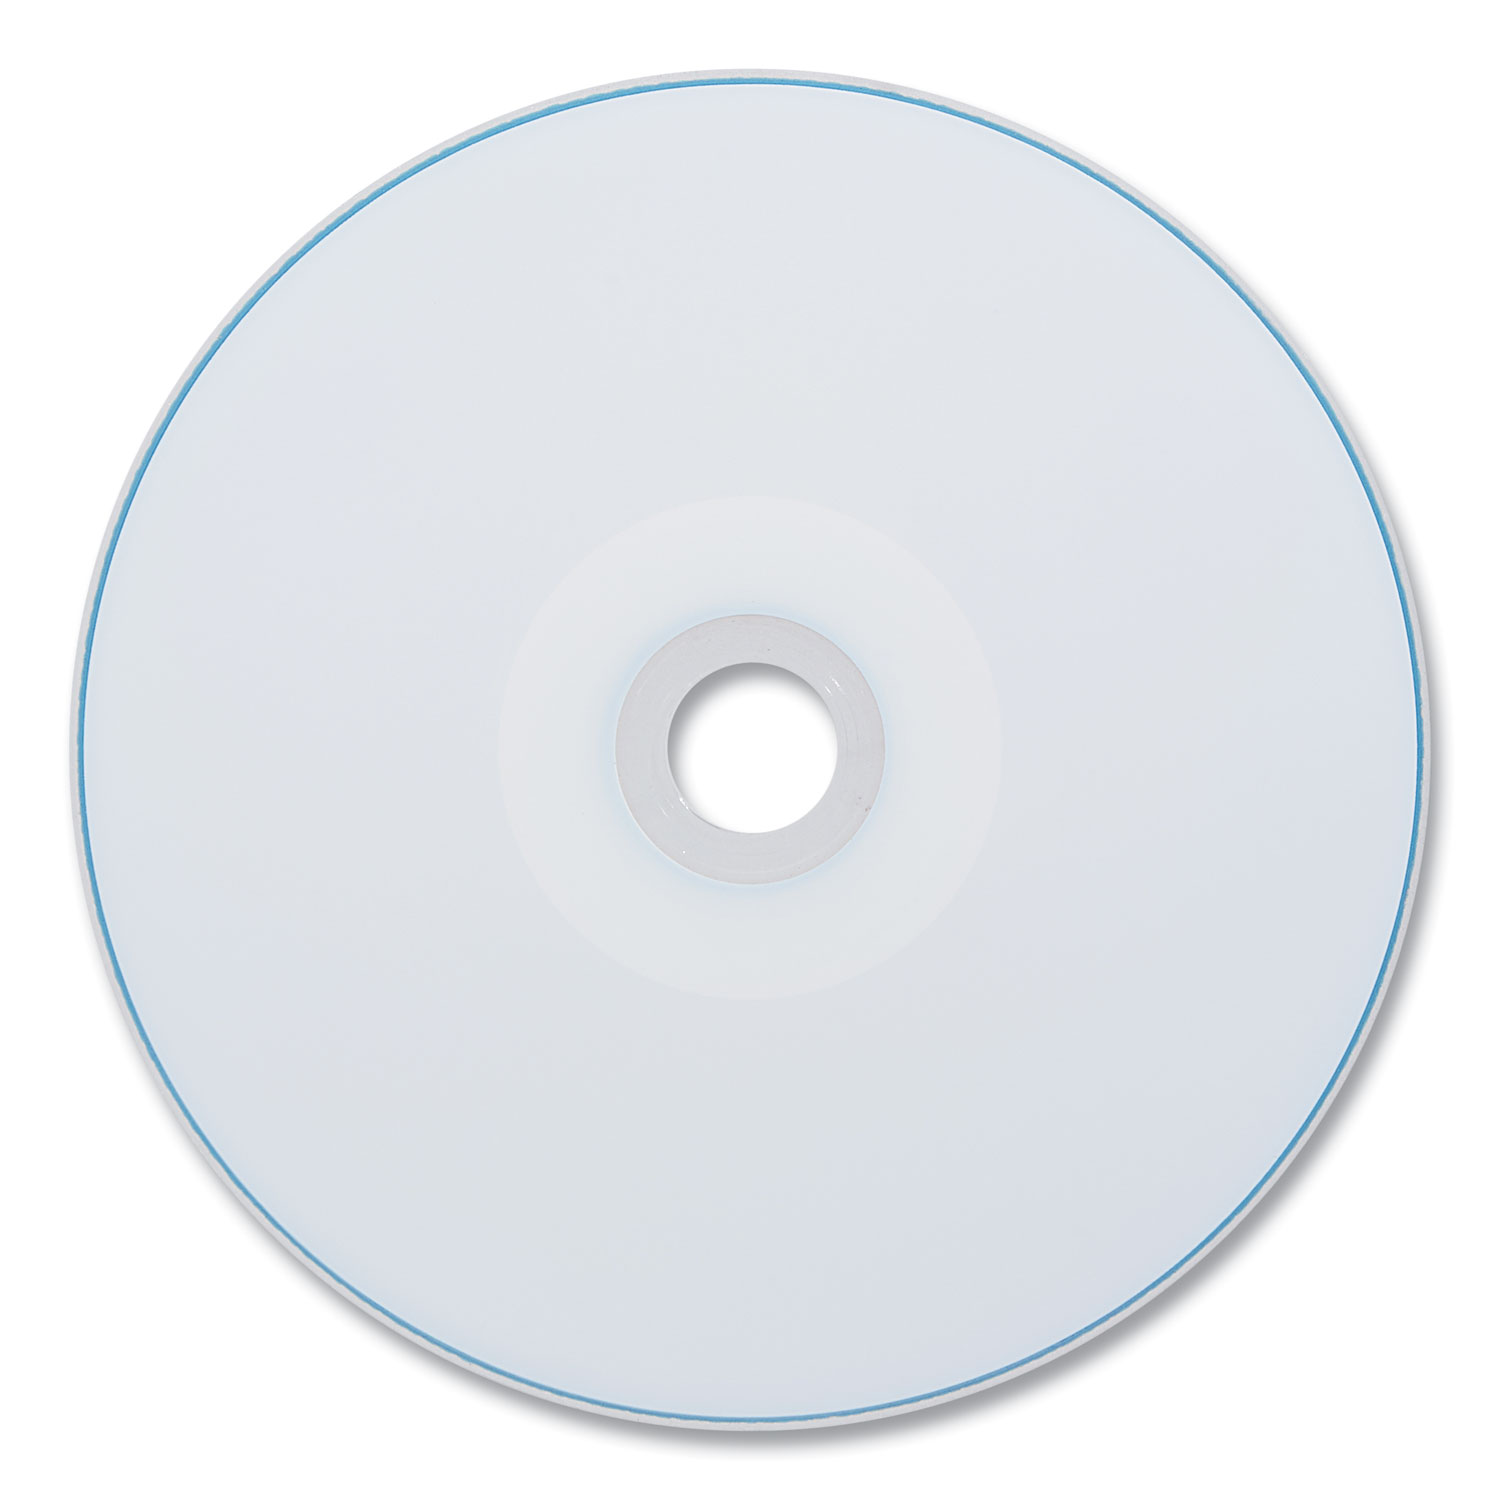 VERBATIM CD-R Multi-Use Blank CDs 80 Minutes/700mb 53 Discs